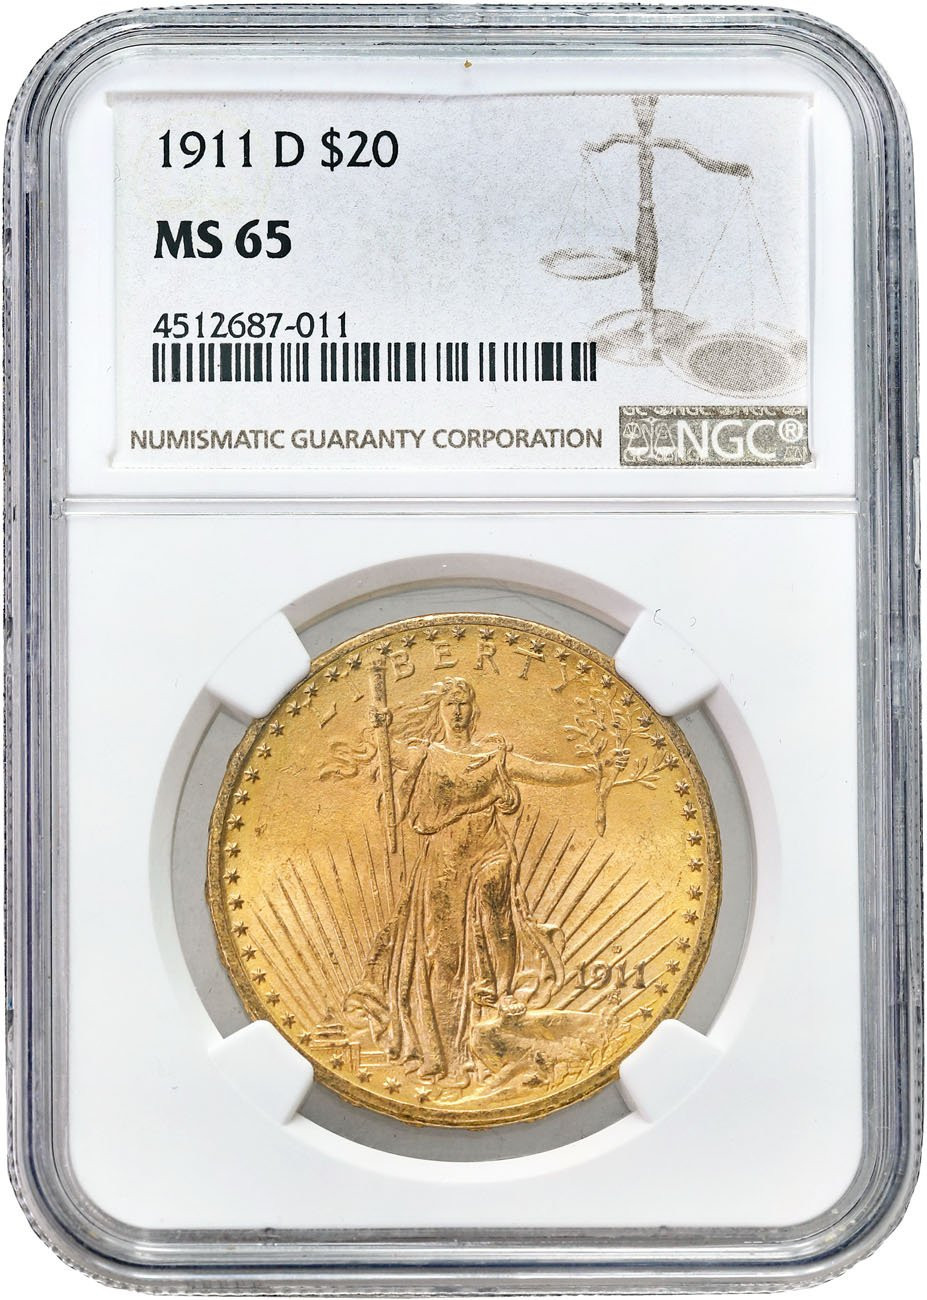 USA 20 $ dolarów 1911 D Denver, St. Gaudens NGC MS65